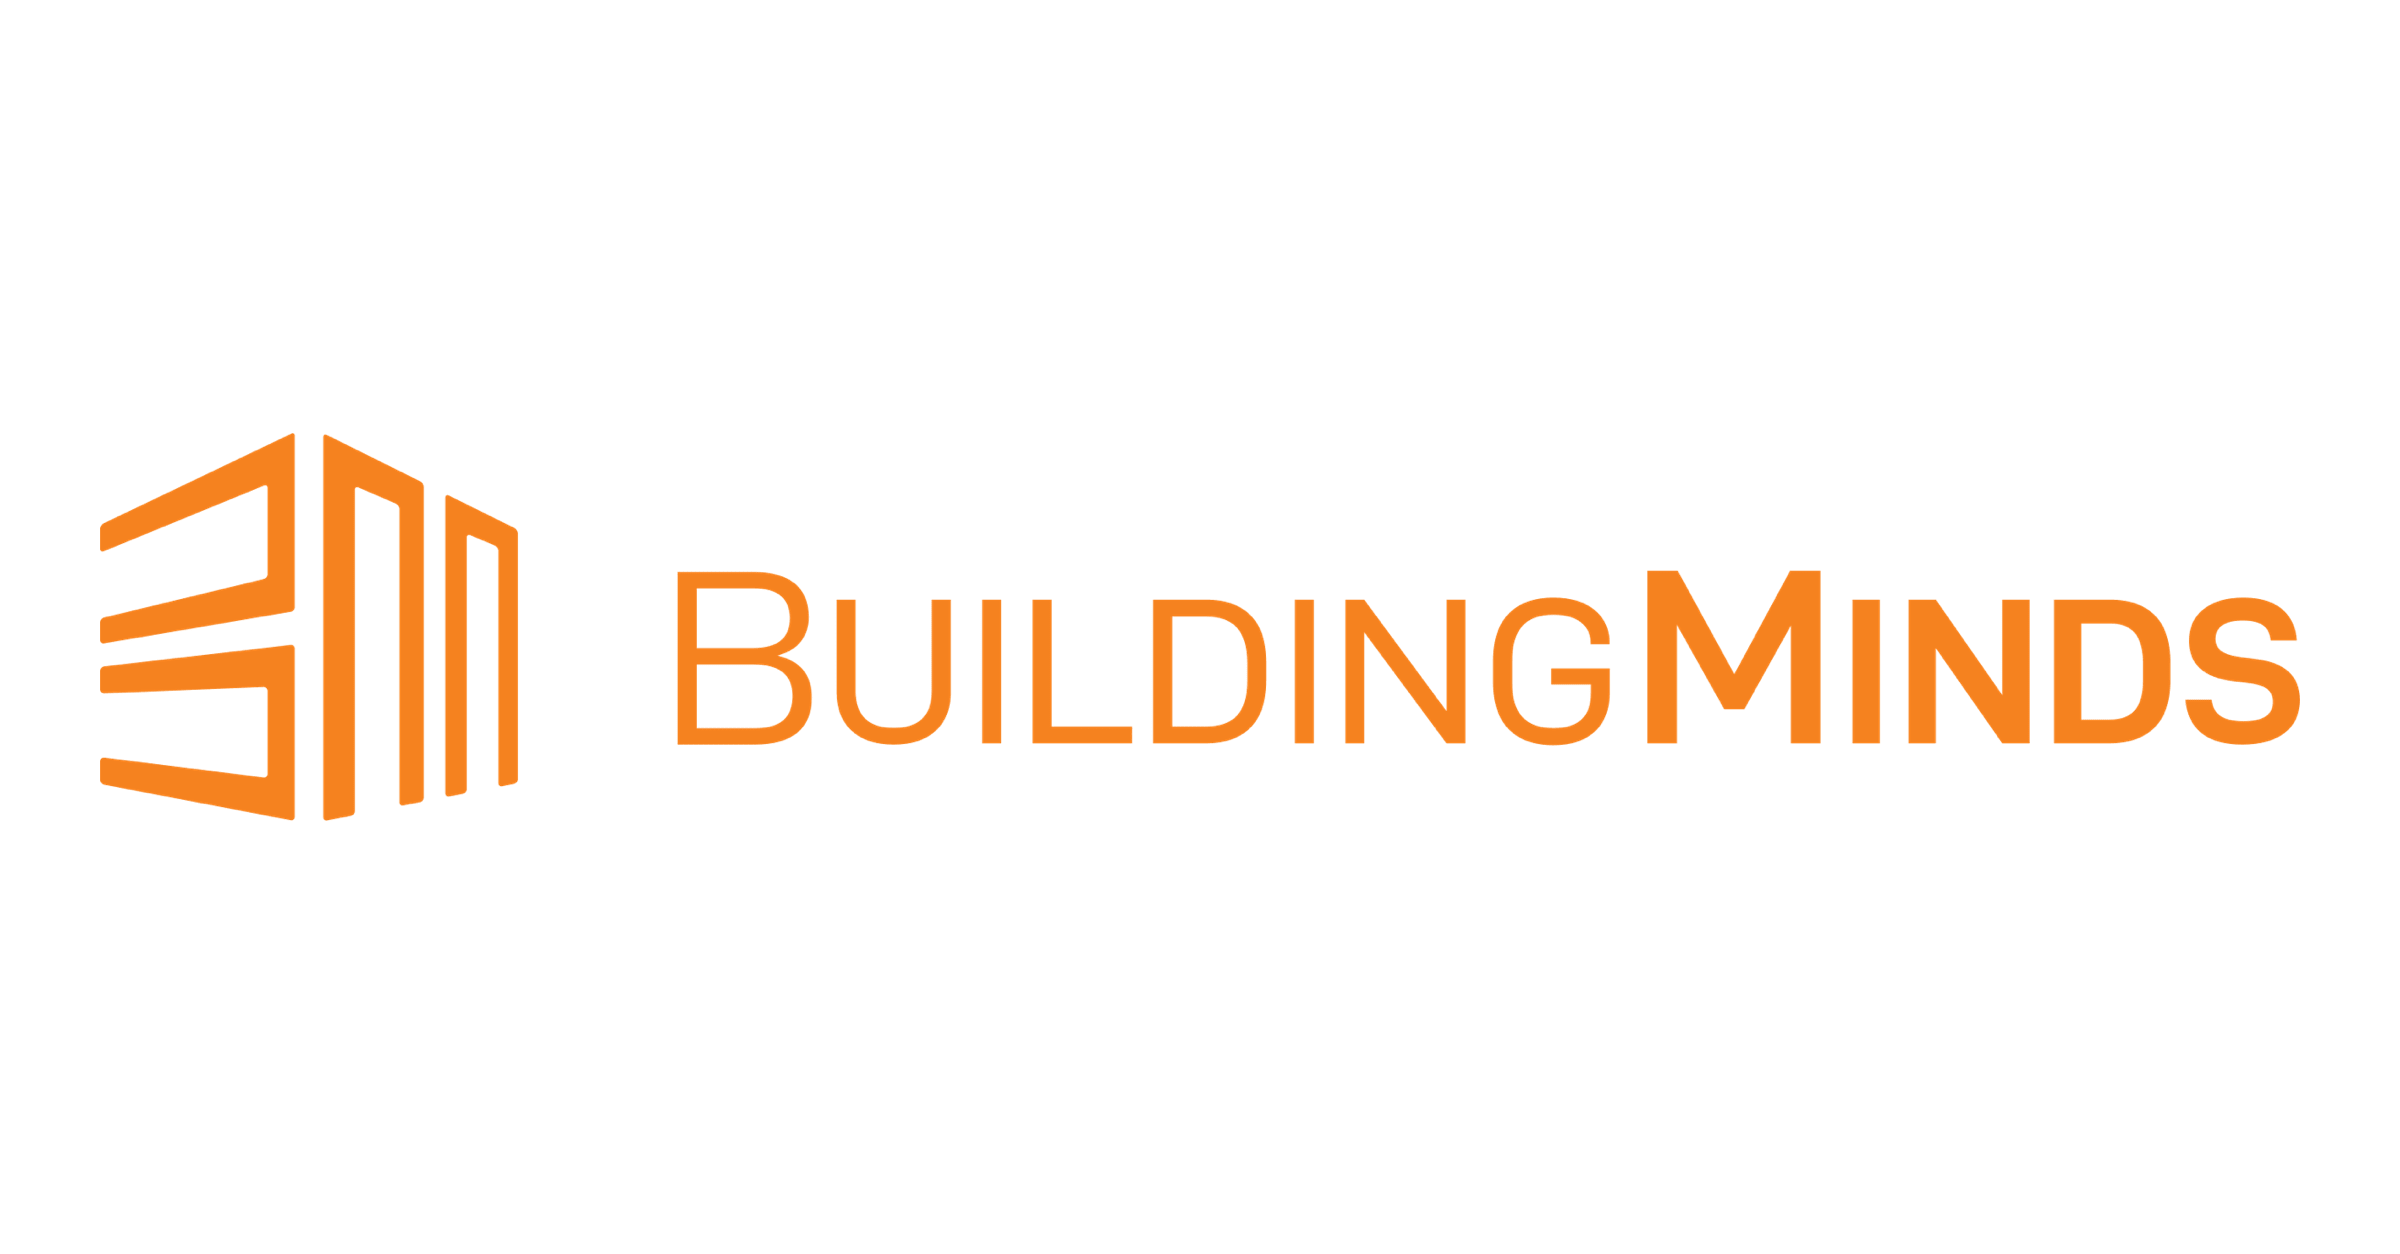 Minds.com Logo - BuildingMinds - Revolutionizing Building Management